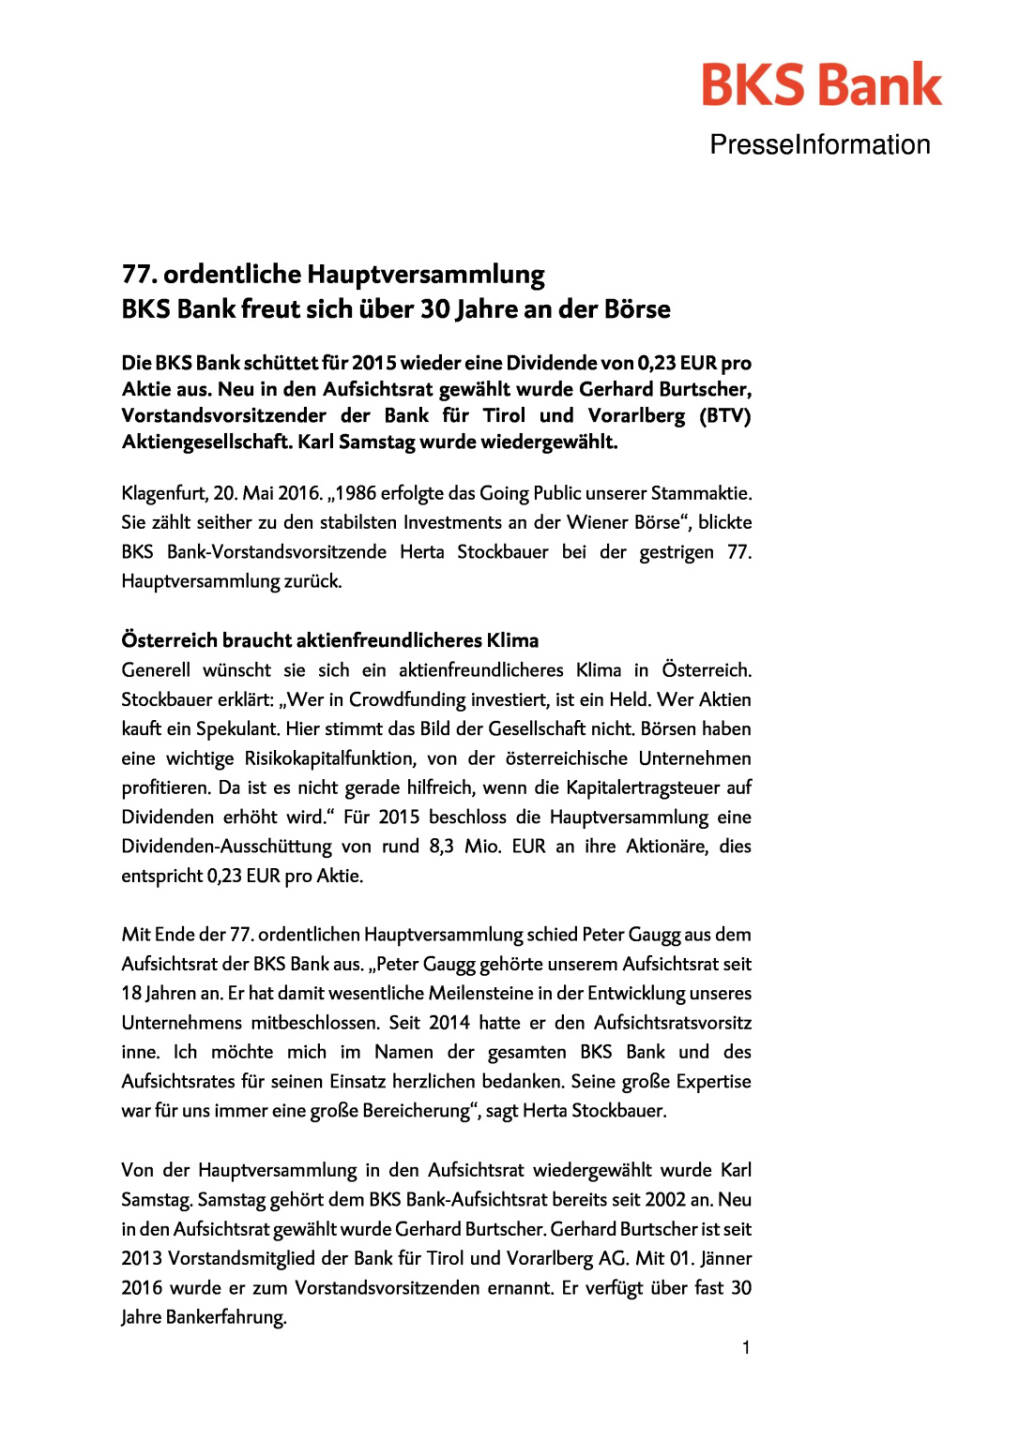 BKS Bank Hauptversammlung: Gerhard Burtscher neu im Aufsichtsrat, Seite 1/2, komplettes Dokument unter http://boerse-social.com/static/uploads/file_1089_bks_bank_hauptversammlung_gerhard_burtscher_neu_im_aufsichtsrat.pdf